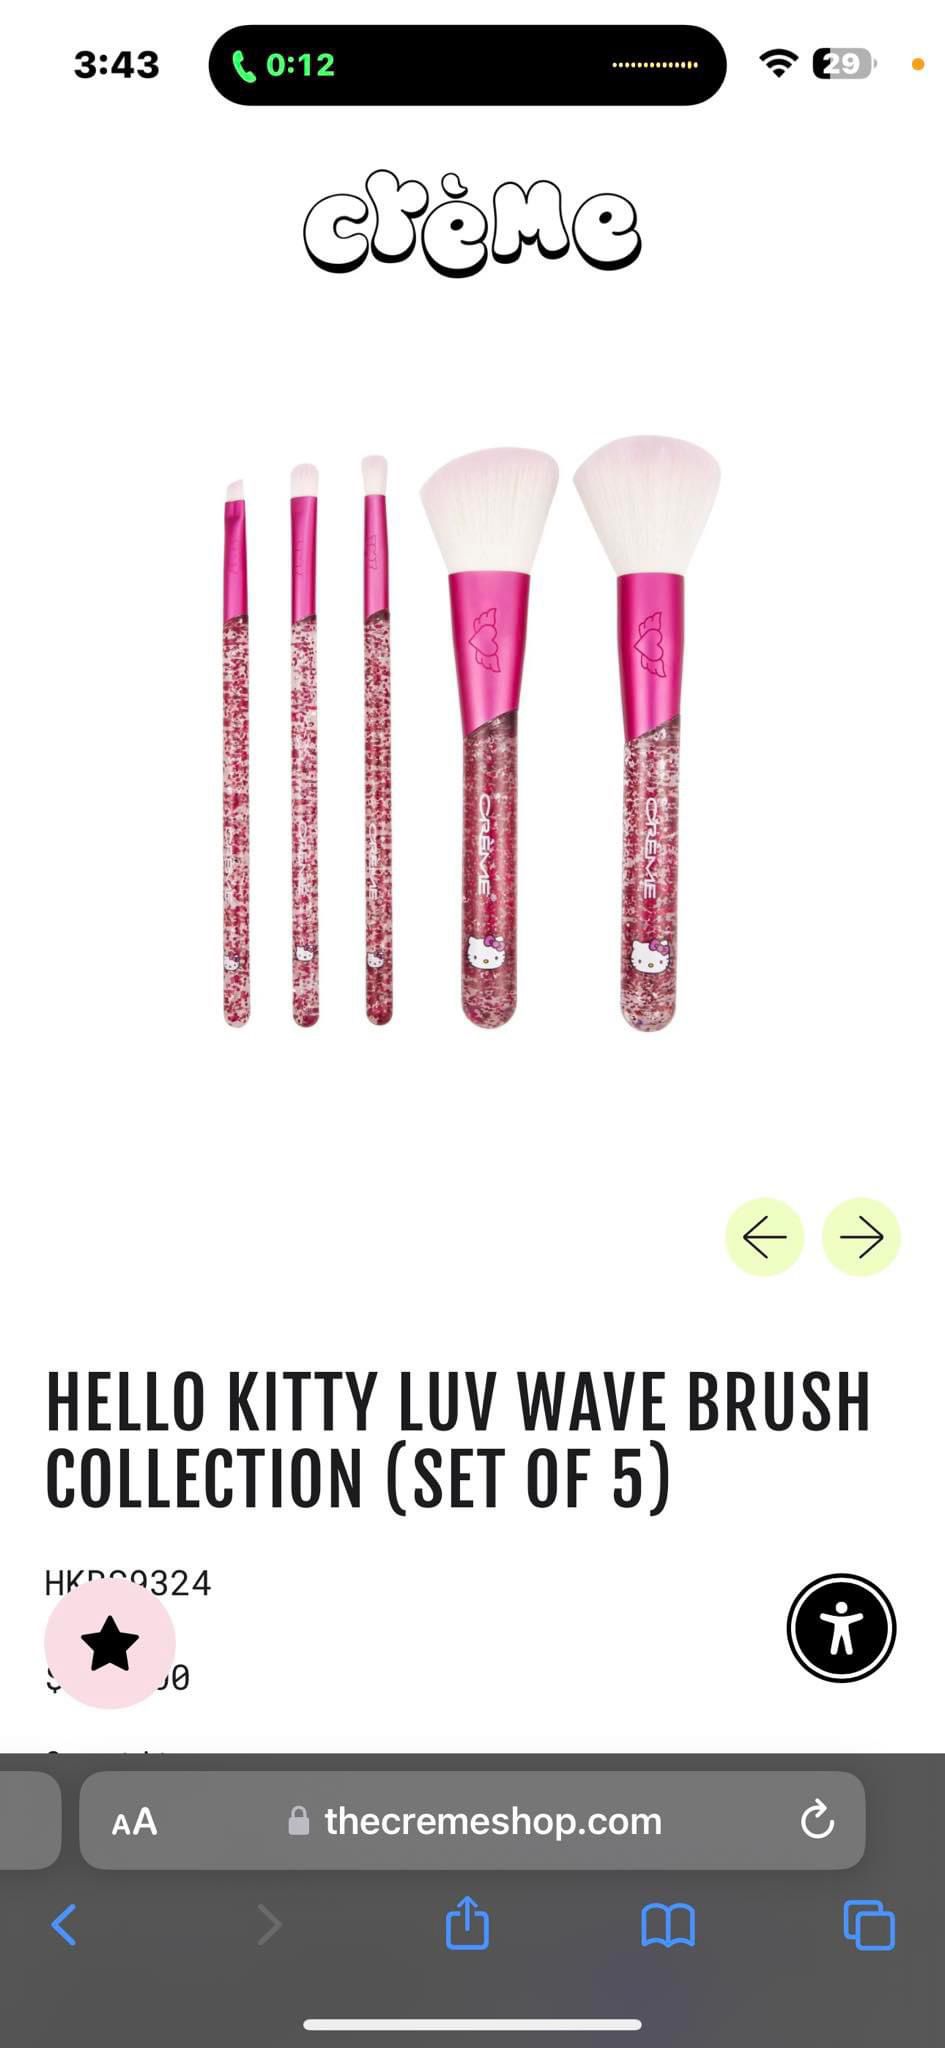 Creme Hello Kitty 5 PCs Brush Set 